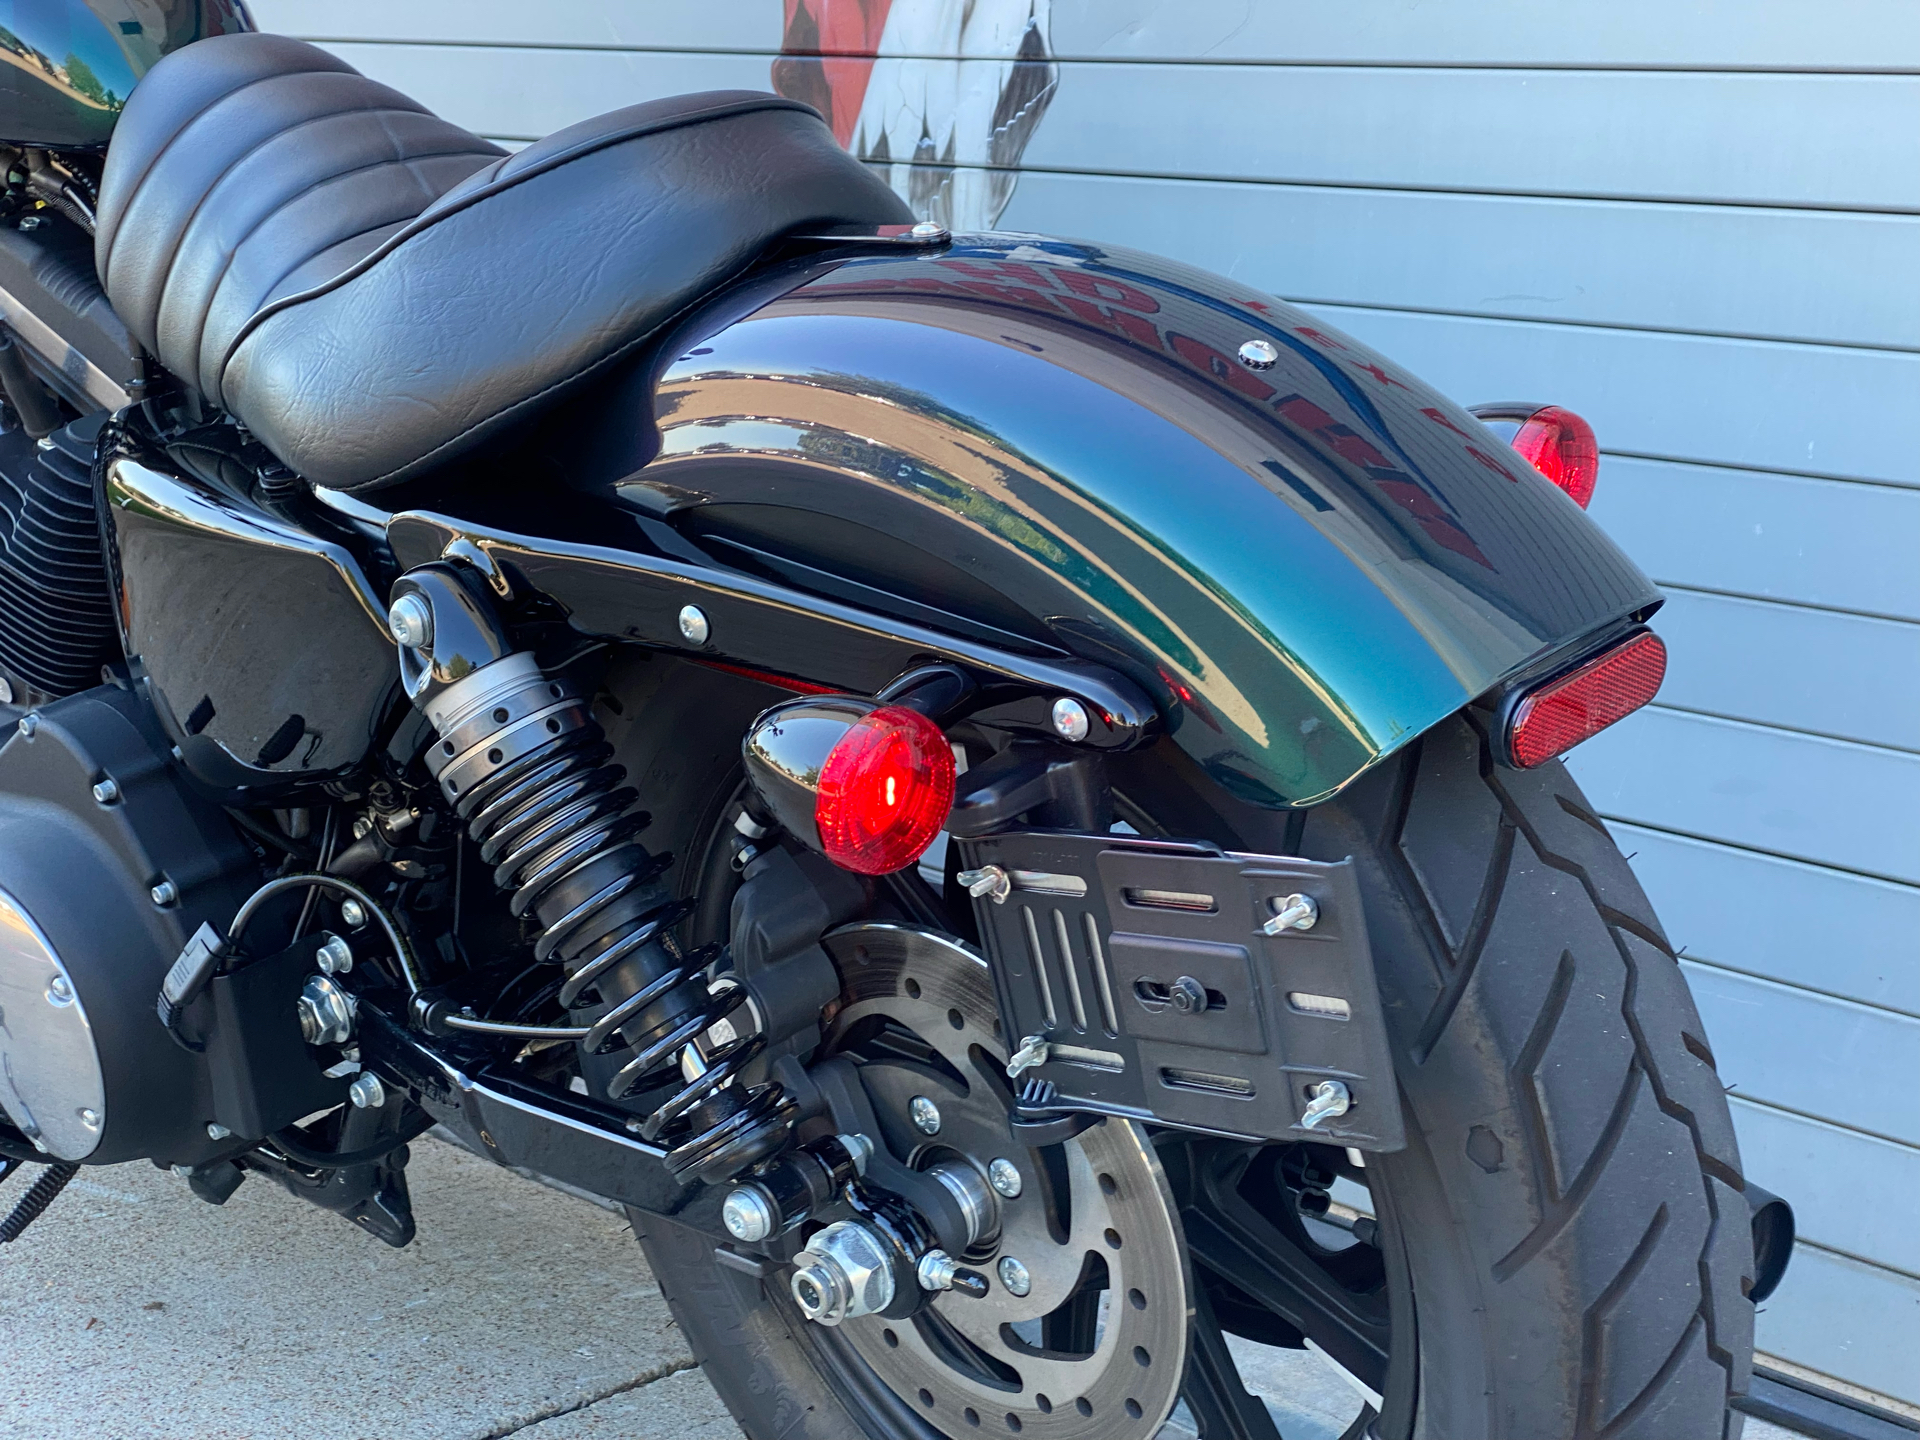 2021 Harley-Davidson Iron 883™ in Grand Prairie, Texas - Photo 18